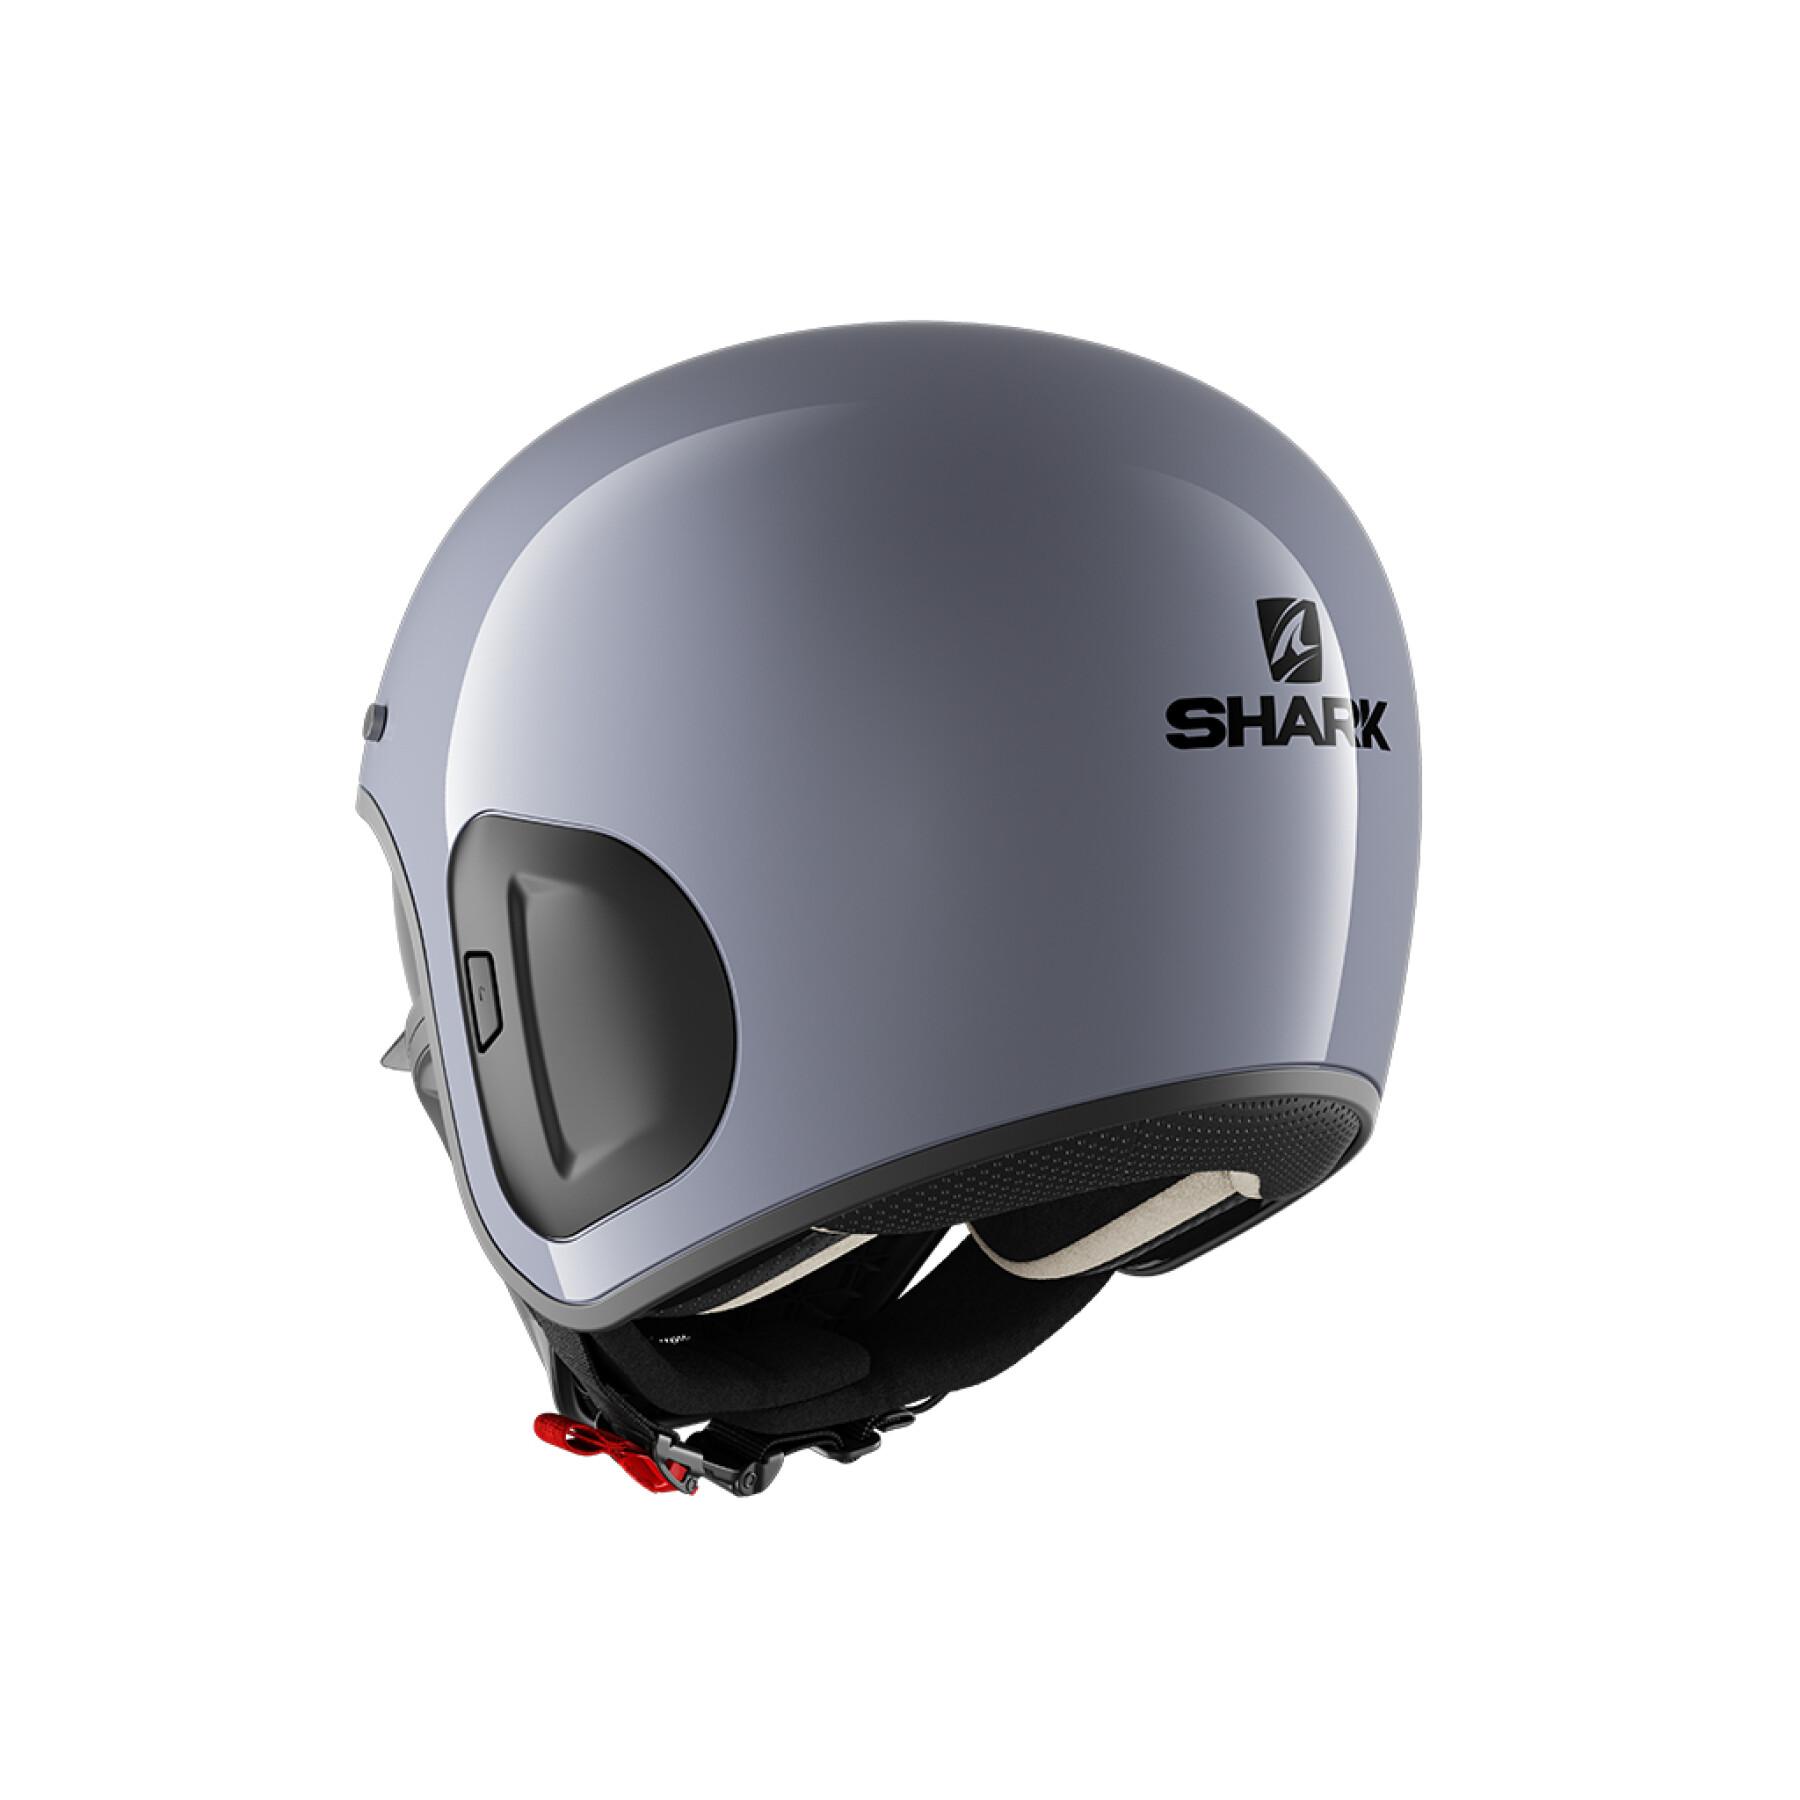 Jet motorcycle helmet Shark s-drak 2 blank